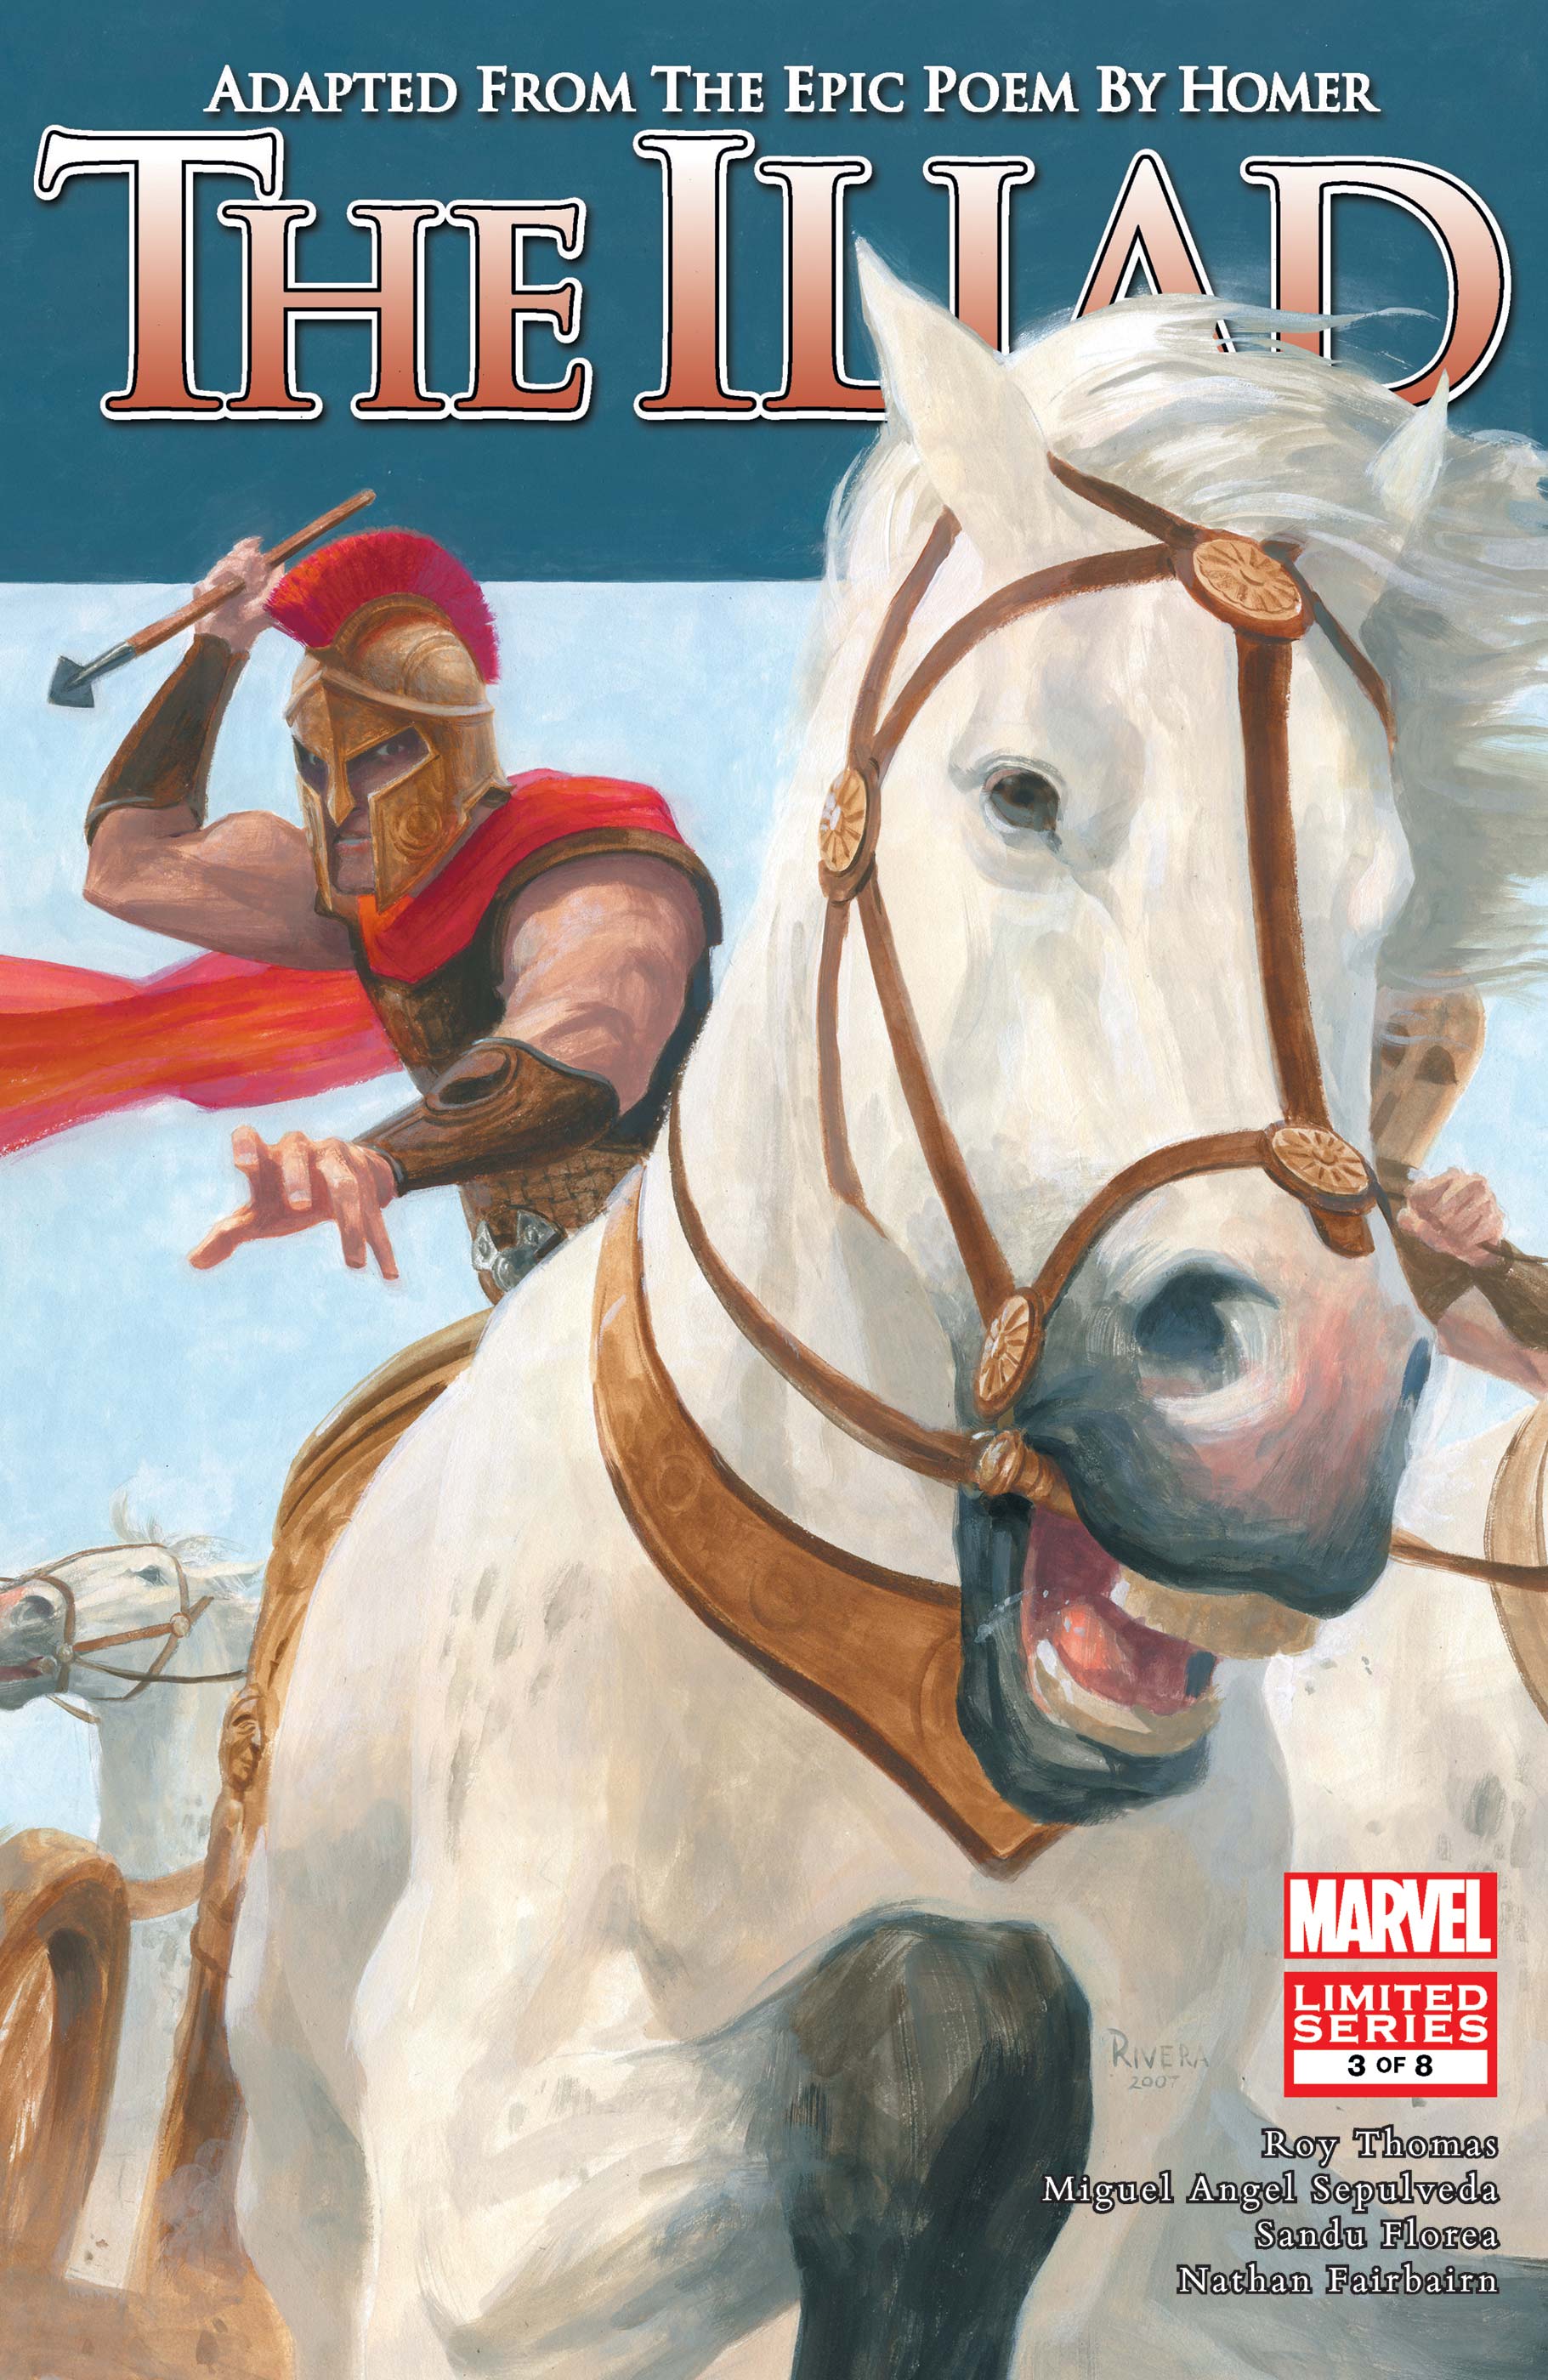 Marvel Illustrated: The Iliad Premiere (Hardcover)